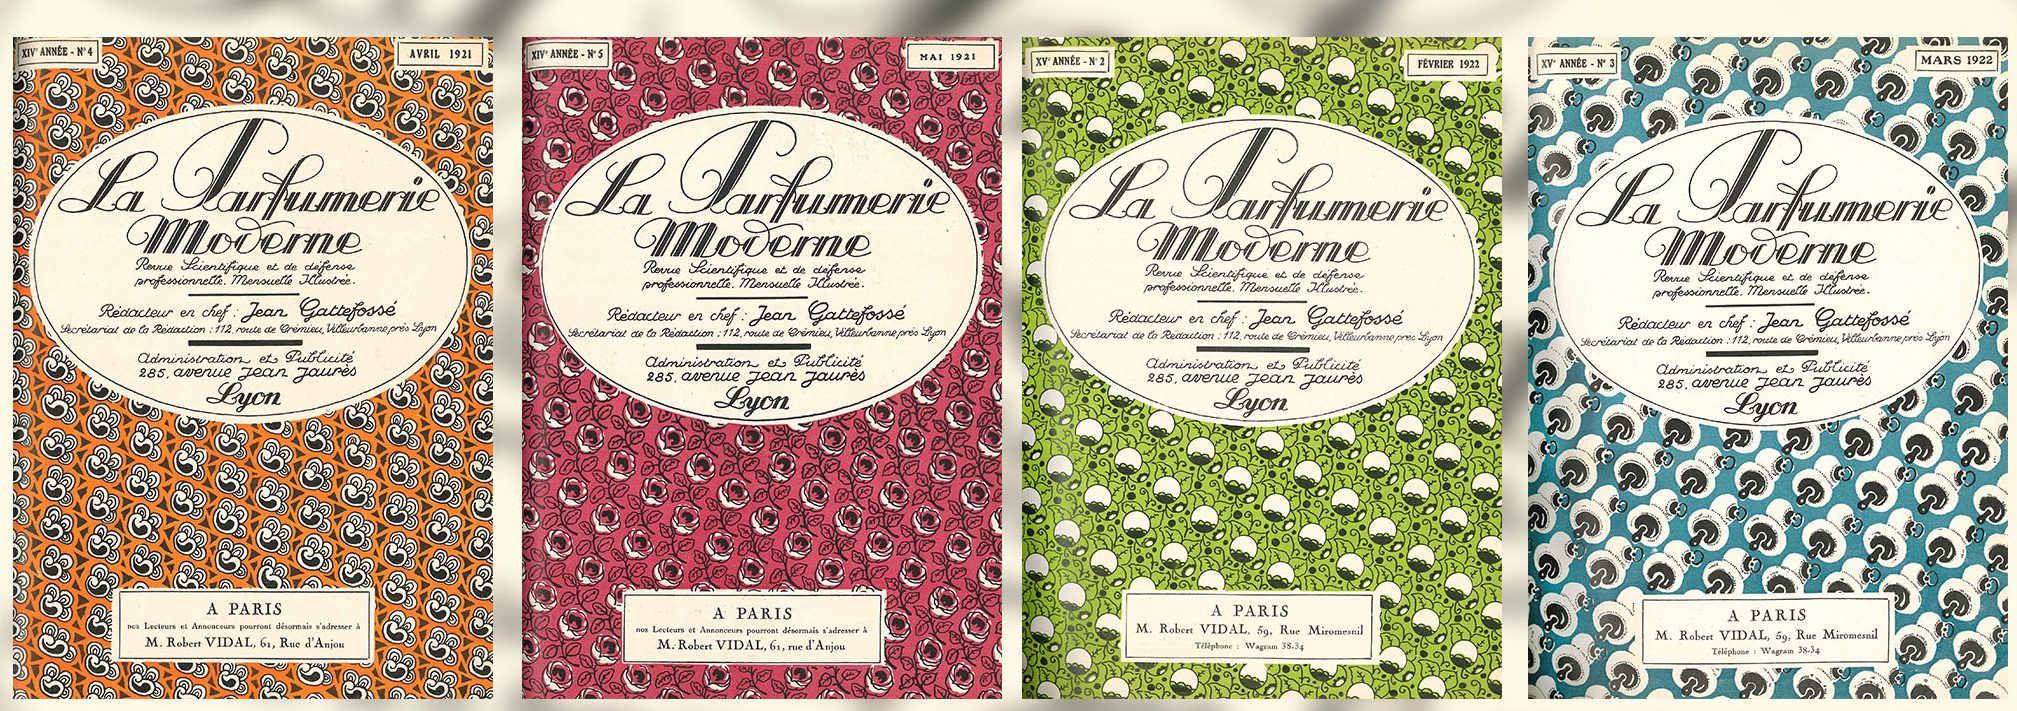 couvs-parfumerie-moderne-annees-1920-e1589471312843.jpg